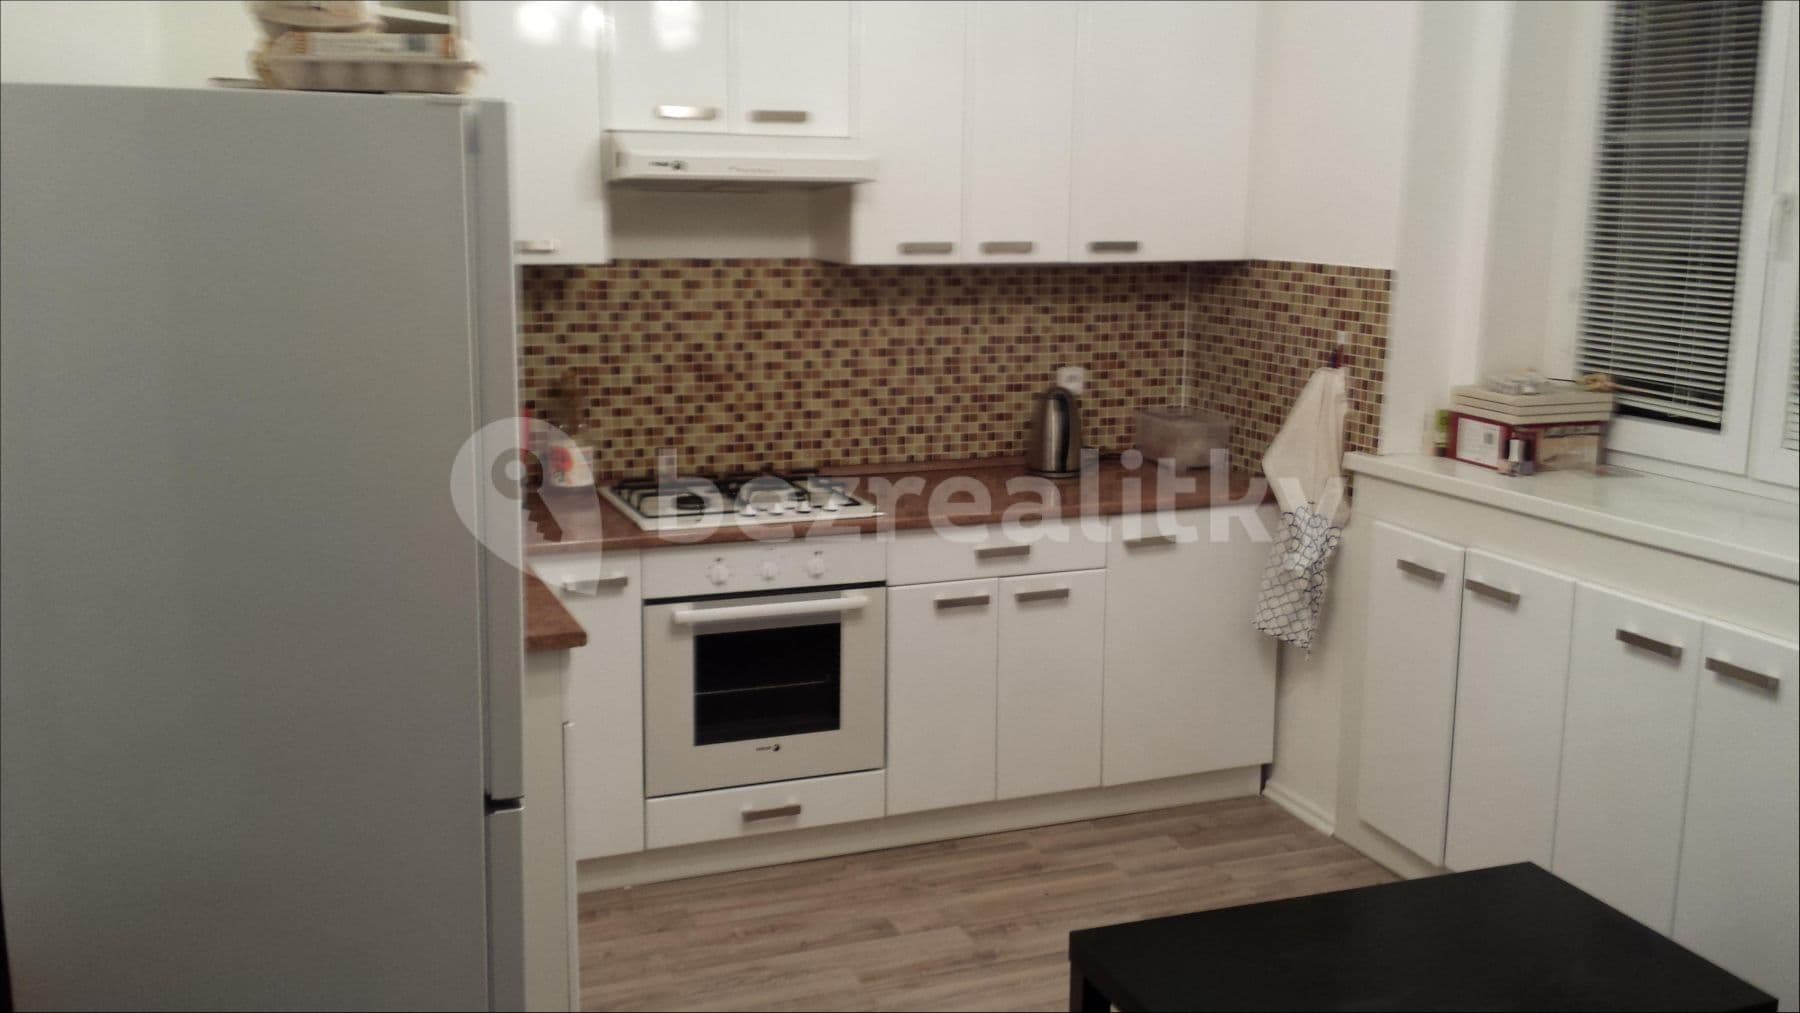 1 bedroom with open-plan kitchen flat to rent, 33 m², Osadní, Prague, Prague